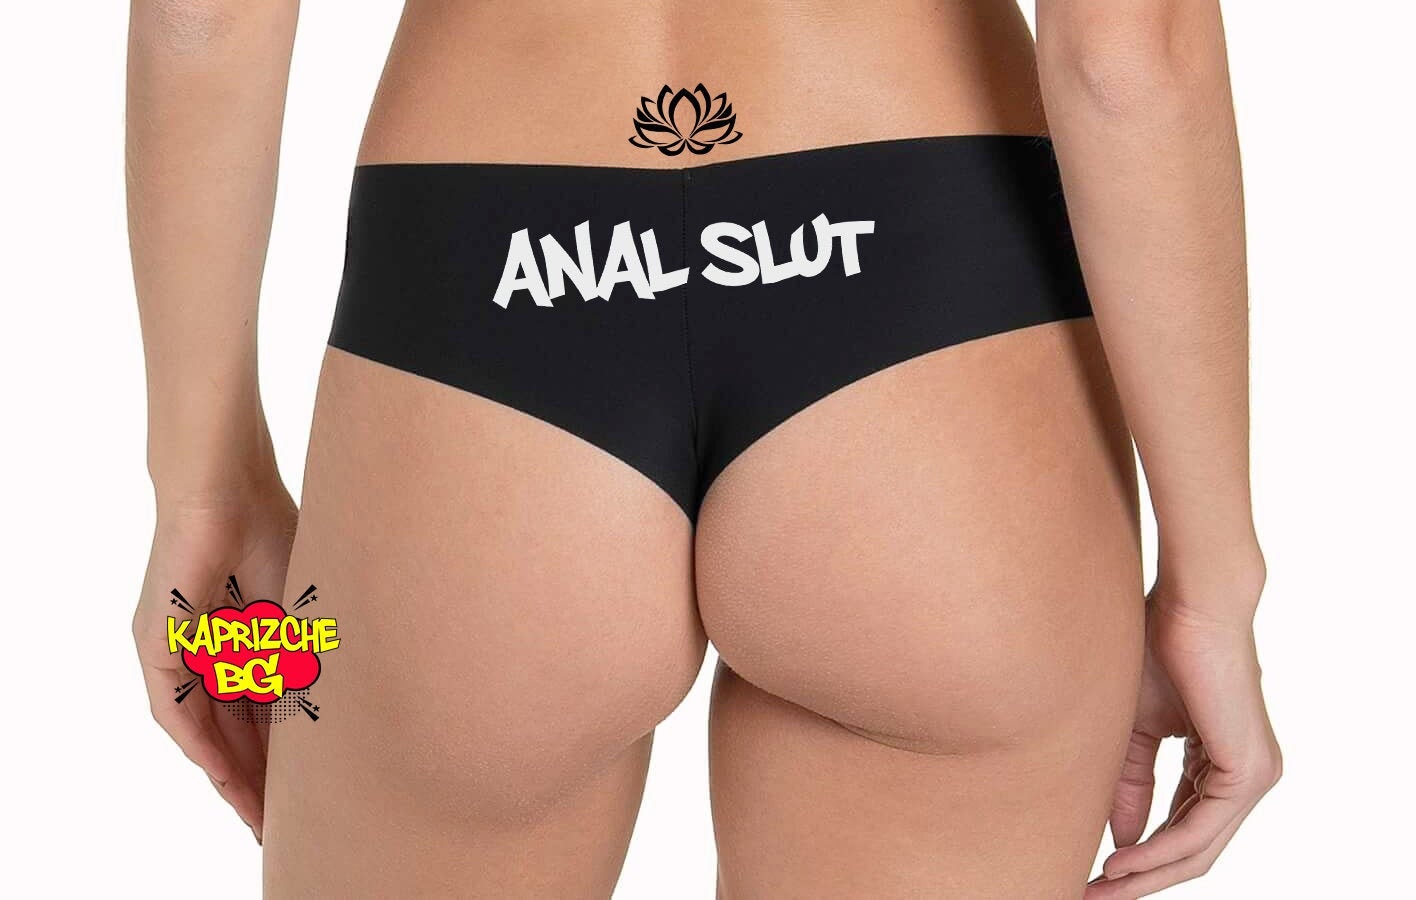 Anal Slut Panties Anal Sex Sexy Fun Funny Boyshort Booty pic